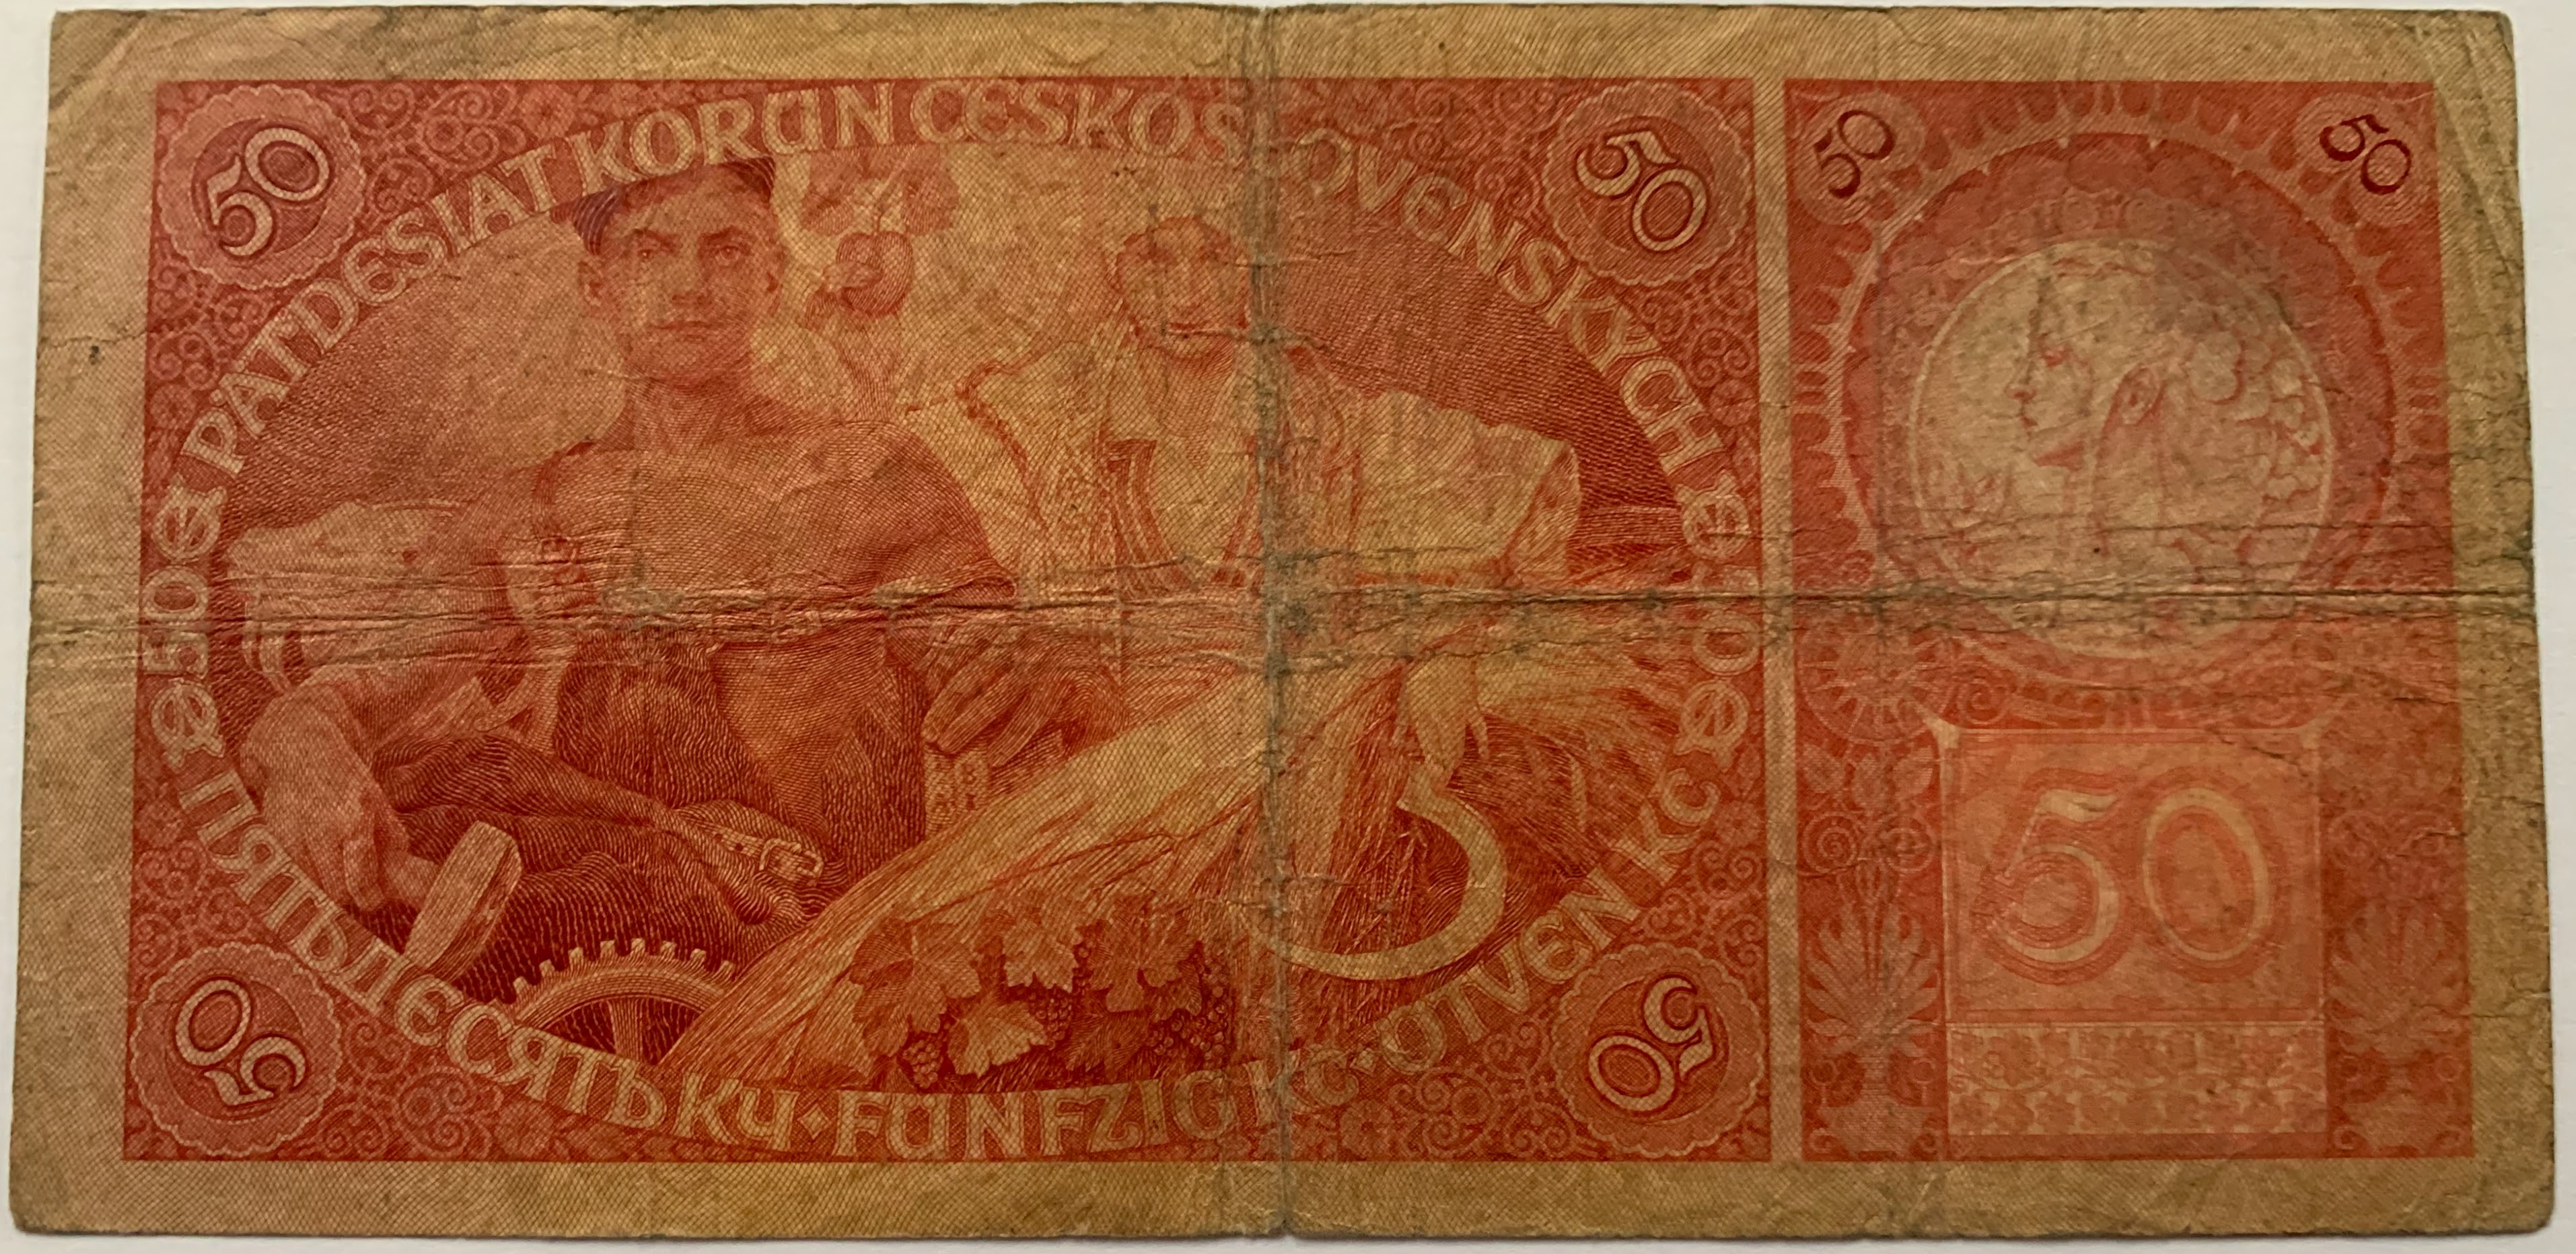 50 Kč 1929 La